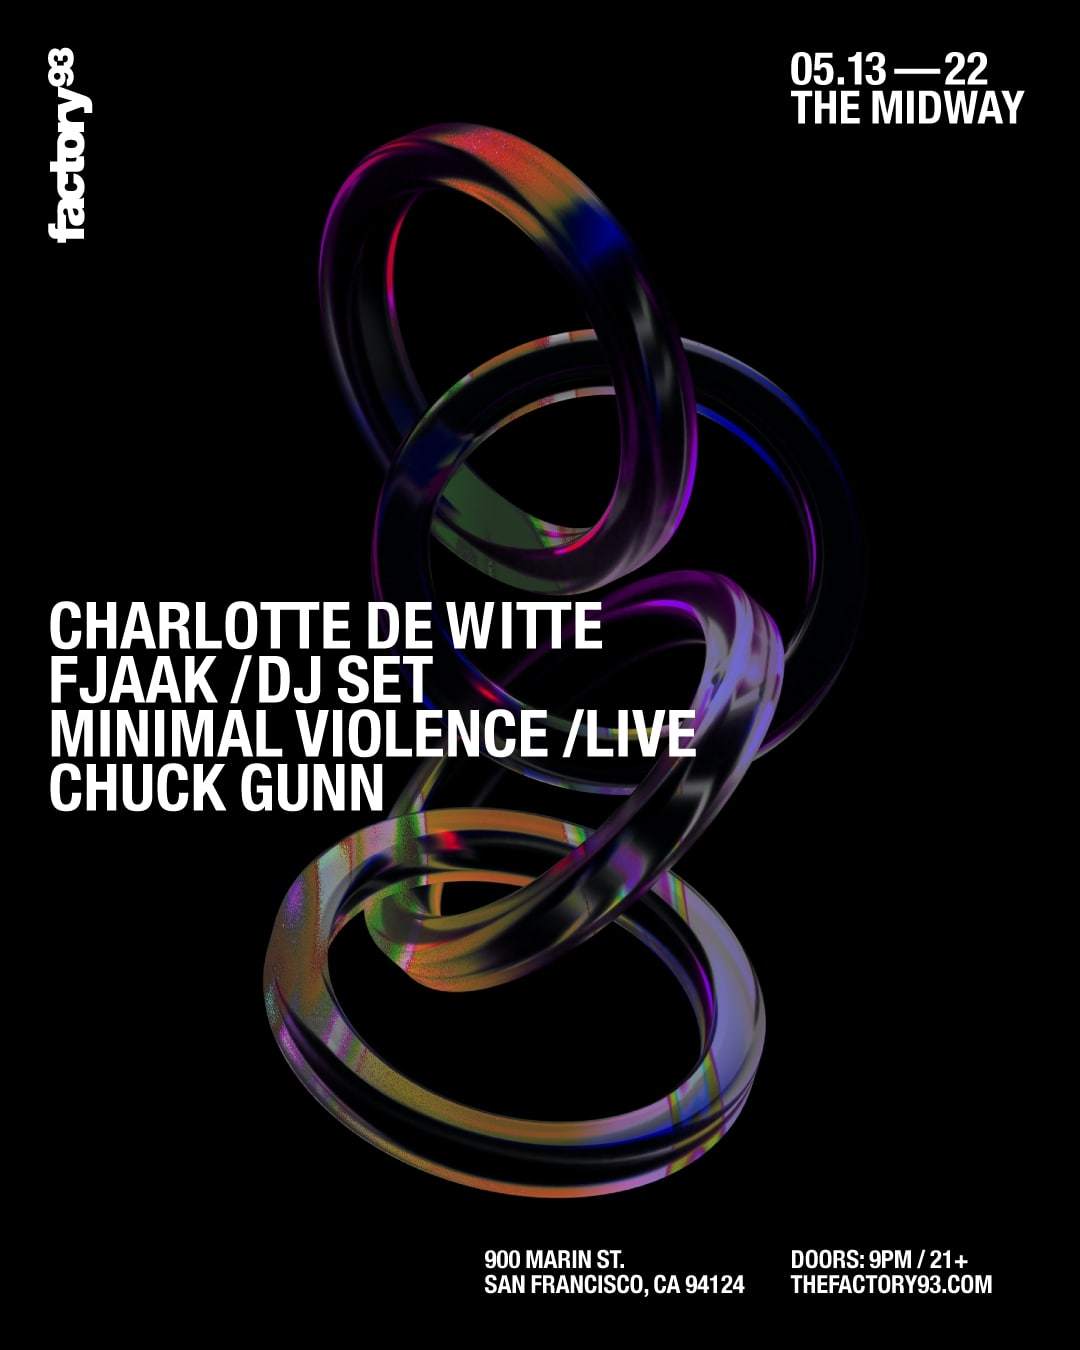 Factory 93 presents Charlotte de Witte, FJAAK (DJ Set), Minimal Violence (Live), Chuck Gunn - フライヤー表